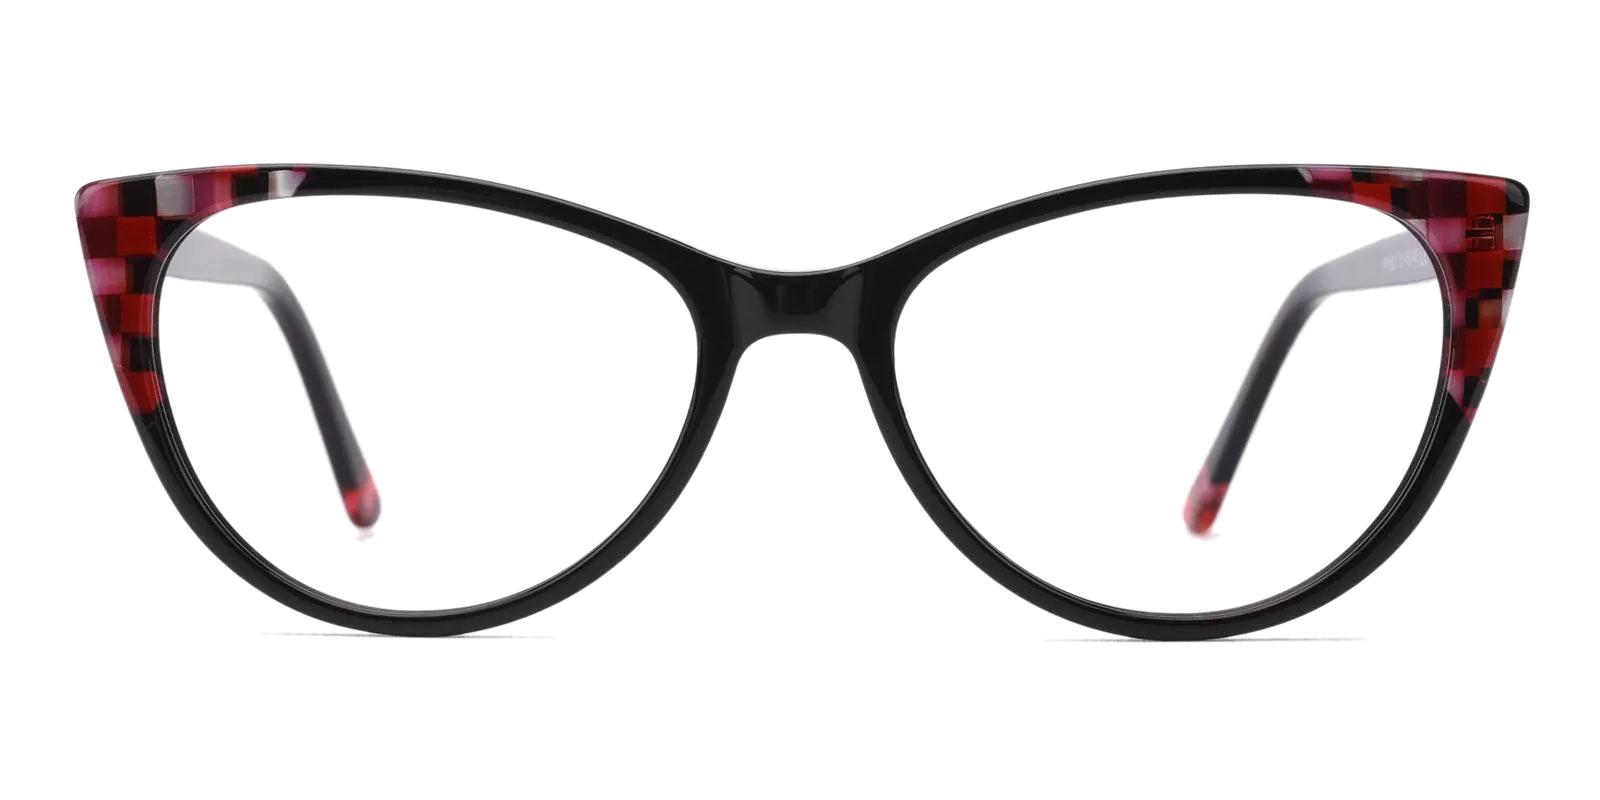 Reily Black Acetate Eyeglasses , Fashion , SpringHinges , UniversalBridgeFit Frames from ABBE Glasses